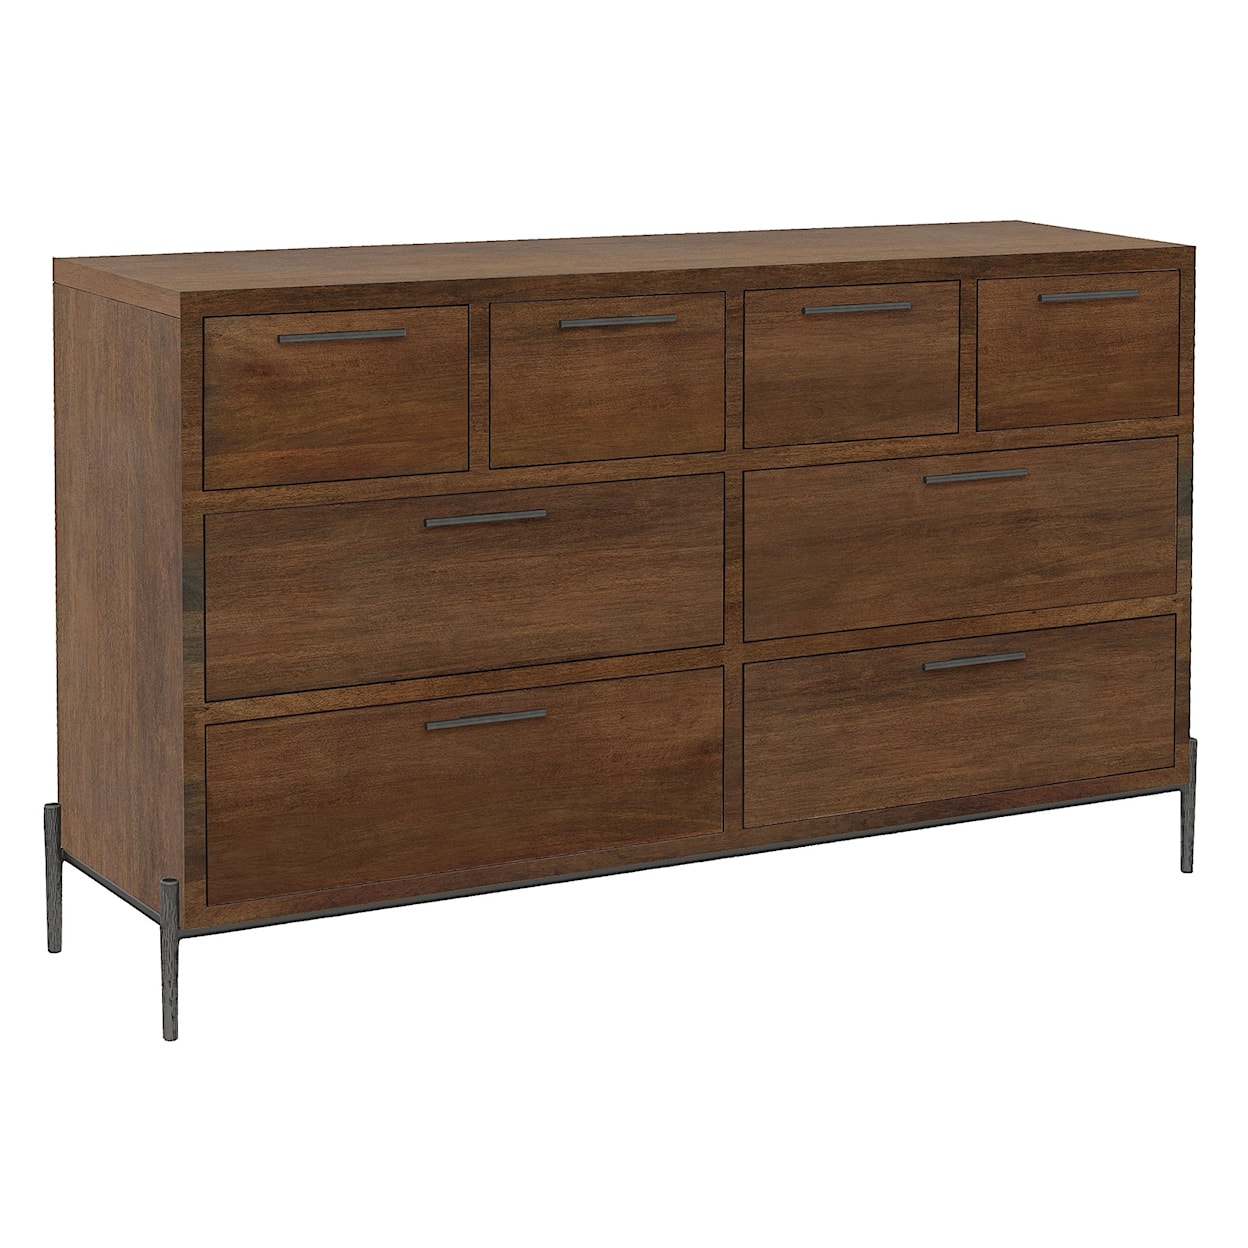 Hekman Bedford Park Six-Drawer Dresser